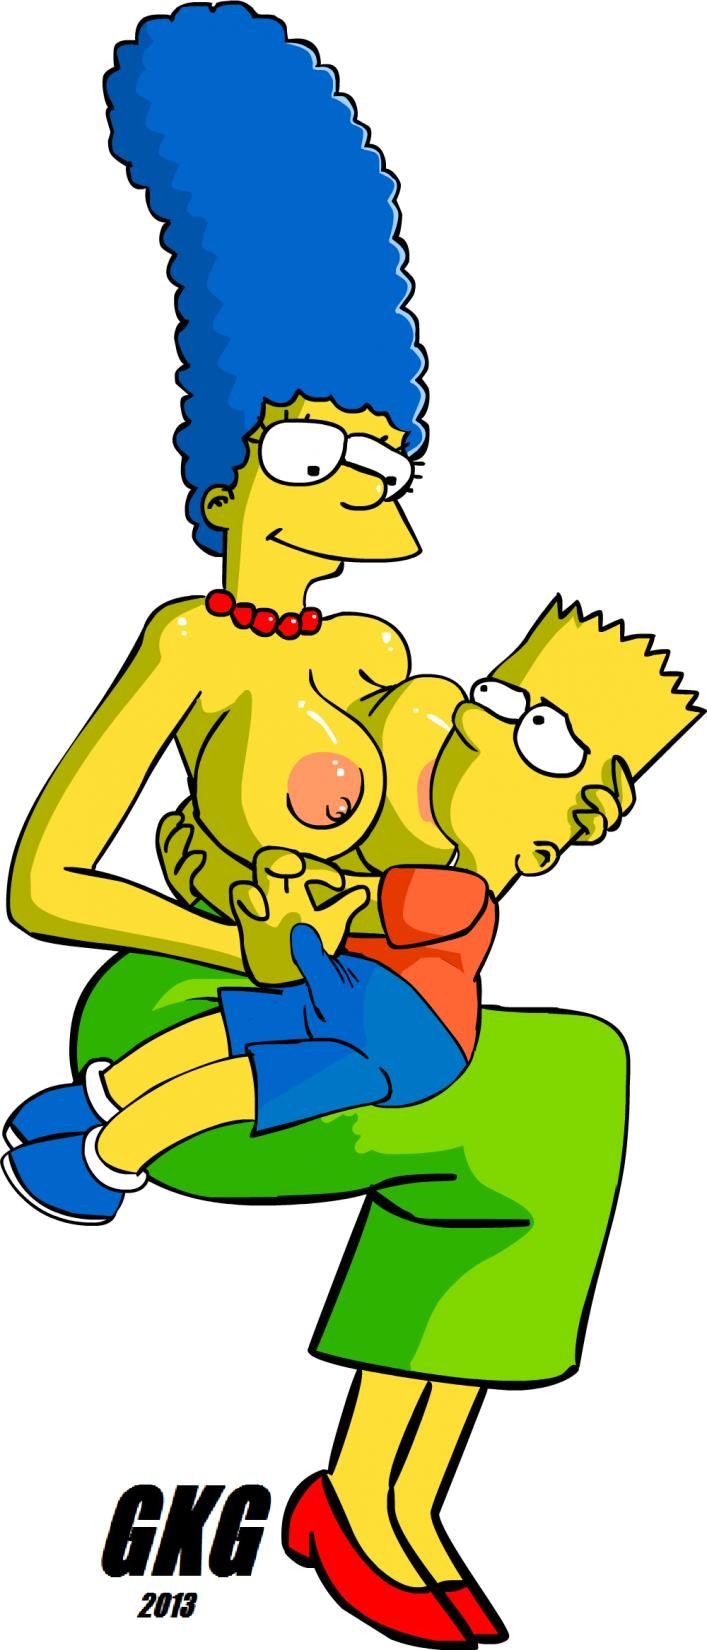 7395882 main 1157686 Bart Simpson GKG Marge Simpson The Simpsons